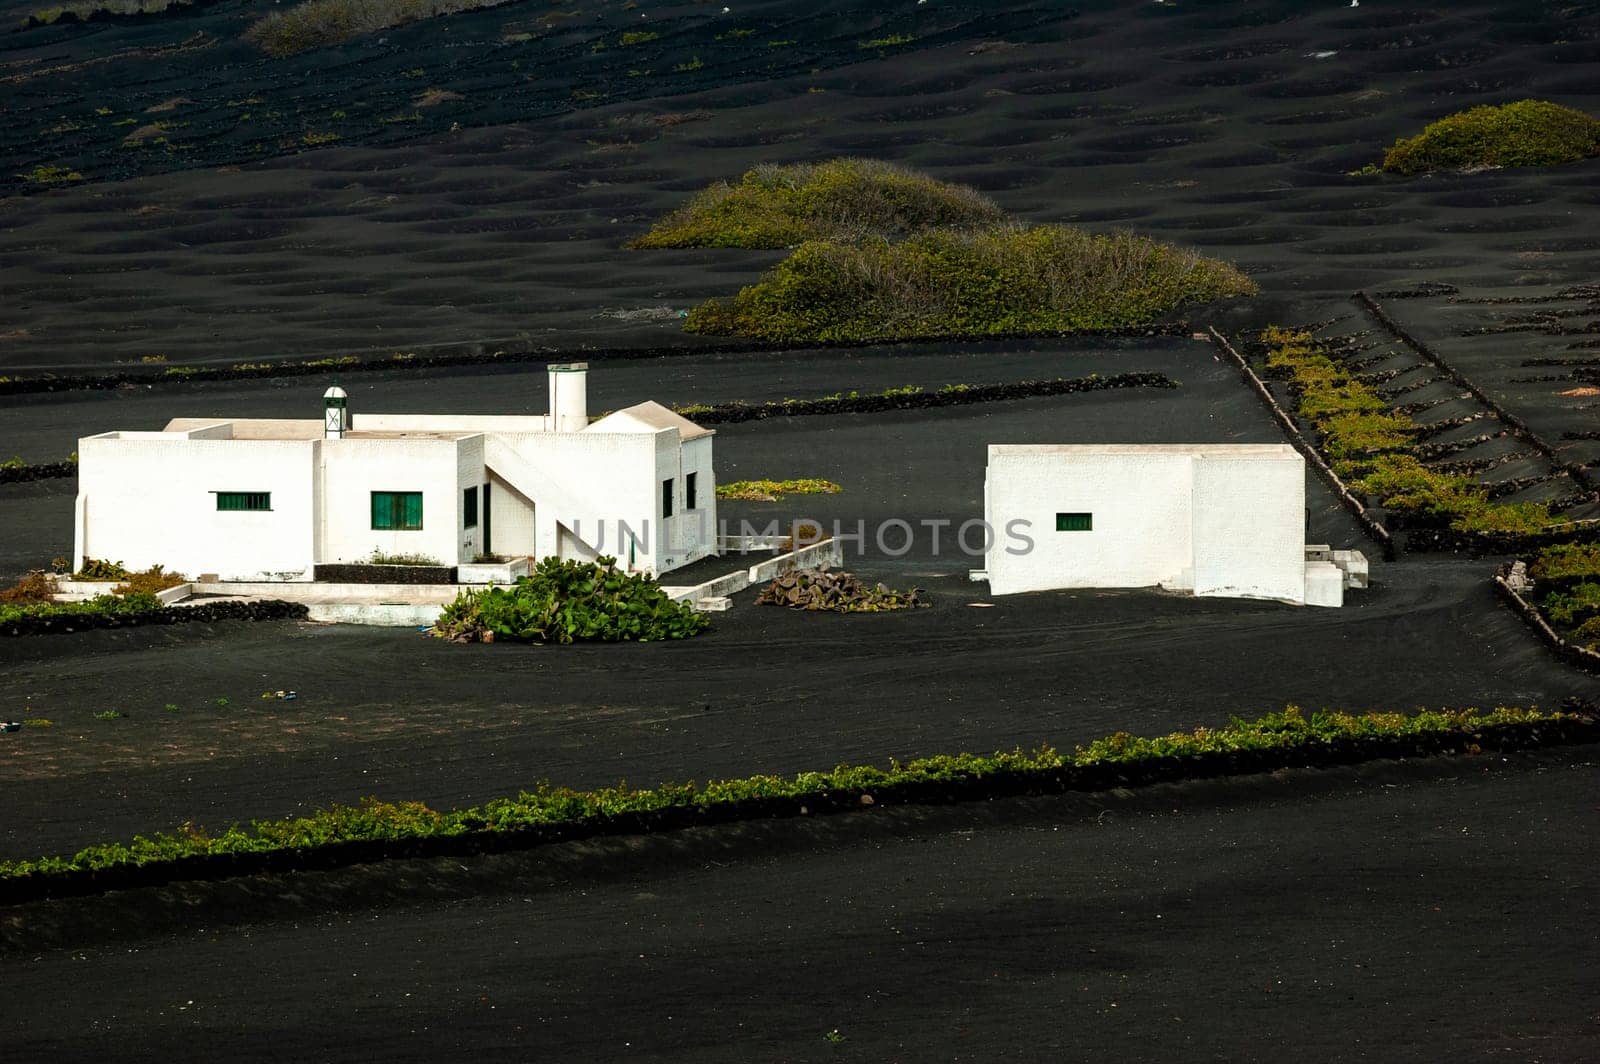 Wineferm in the vineyard region of Lanzarote, Canary Islands, Spain